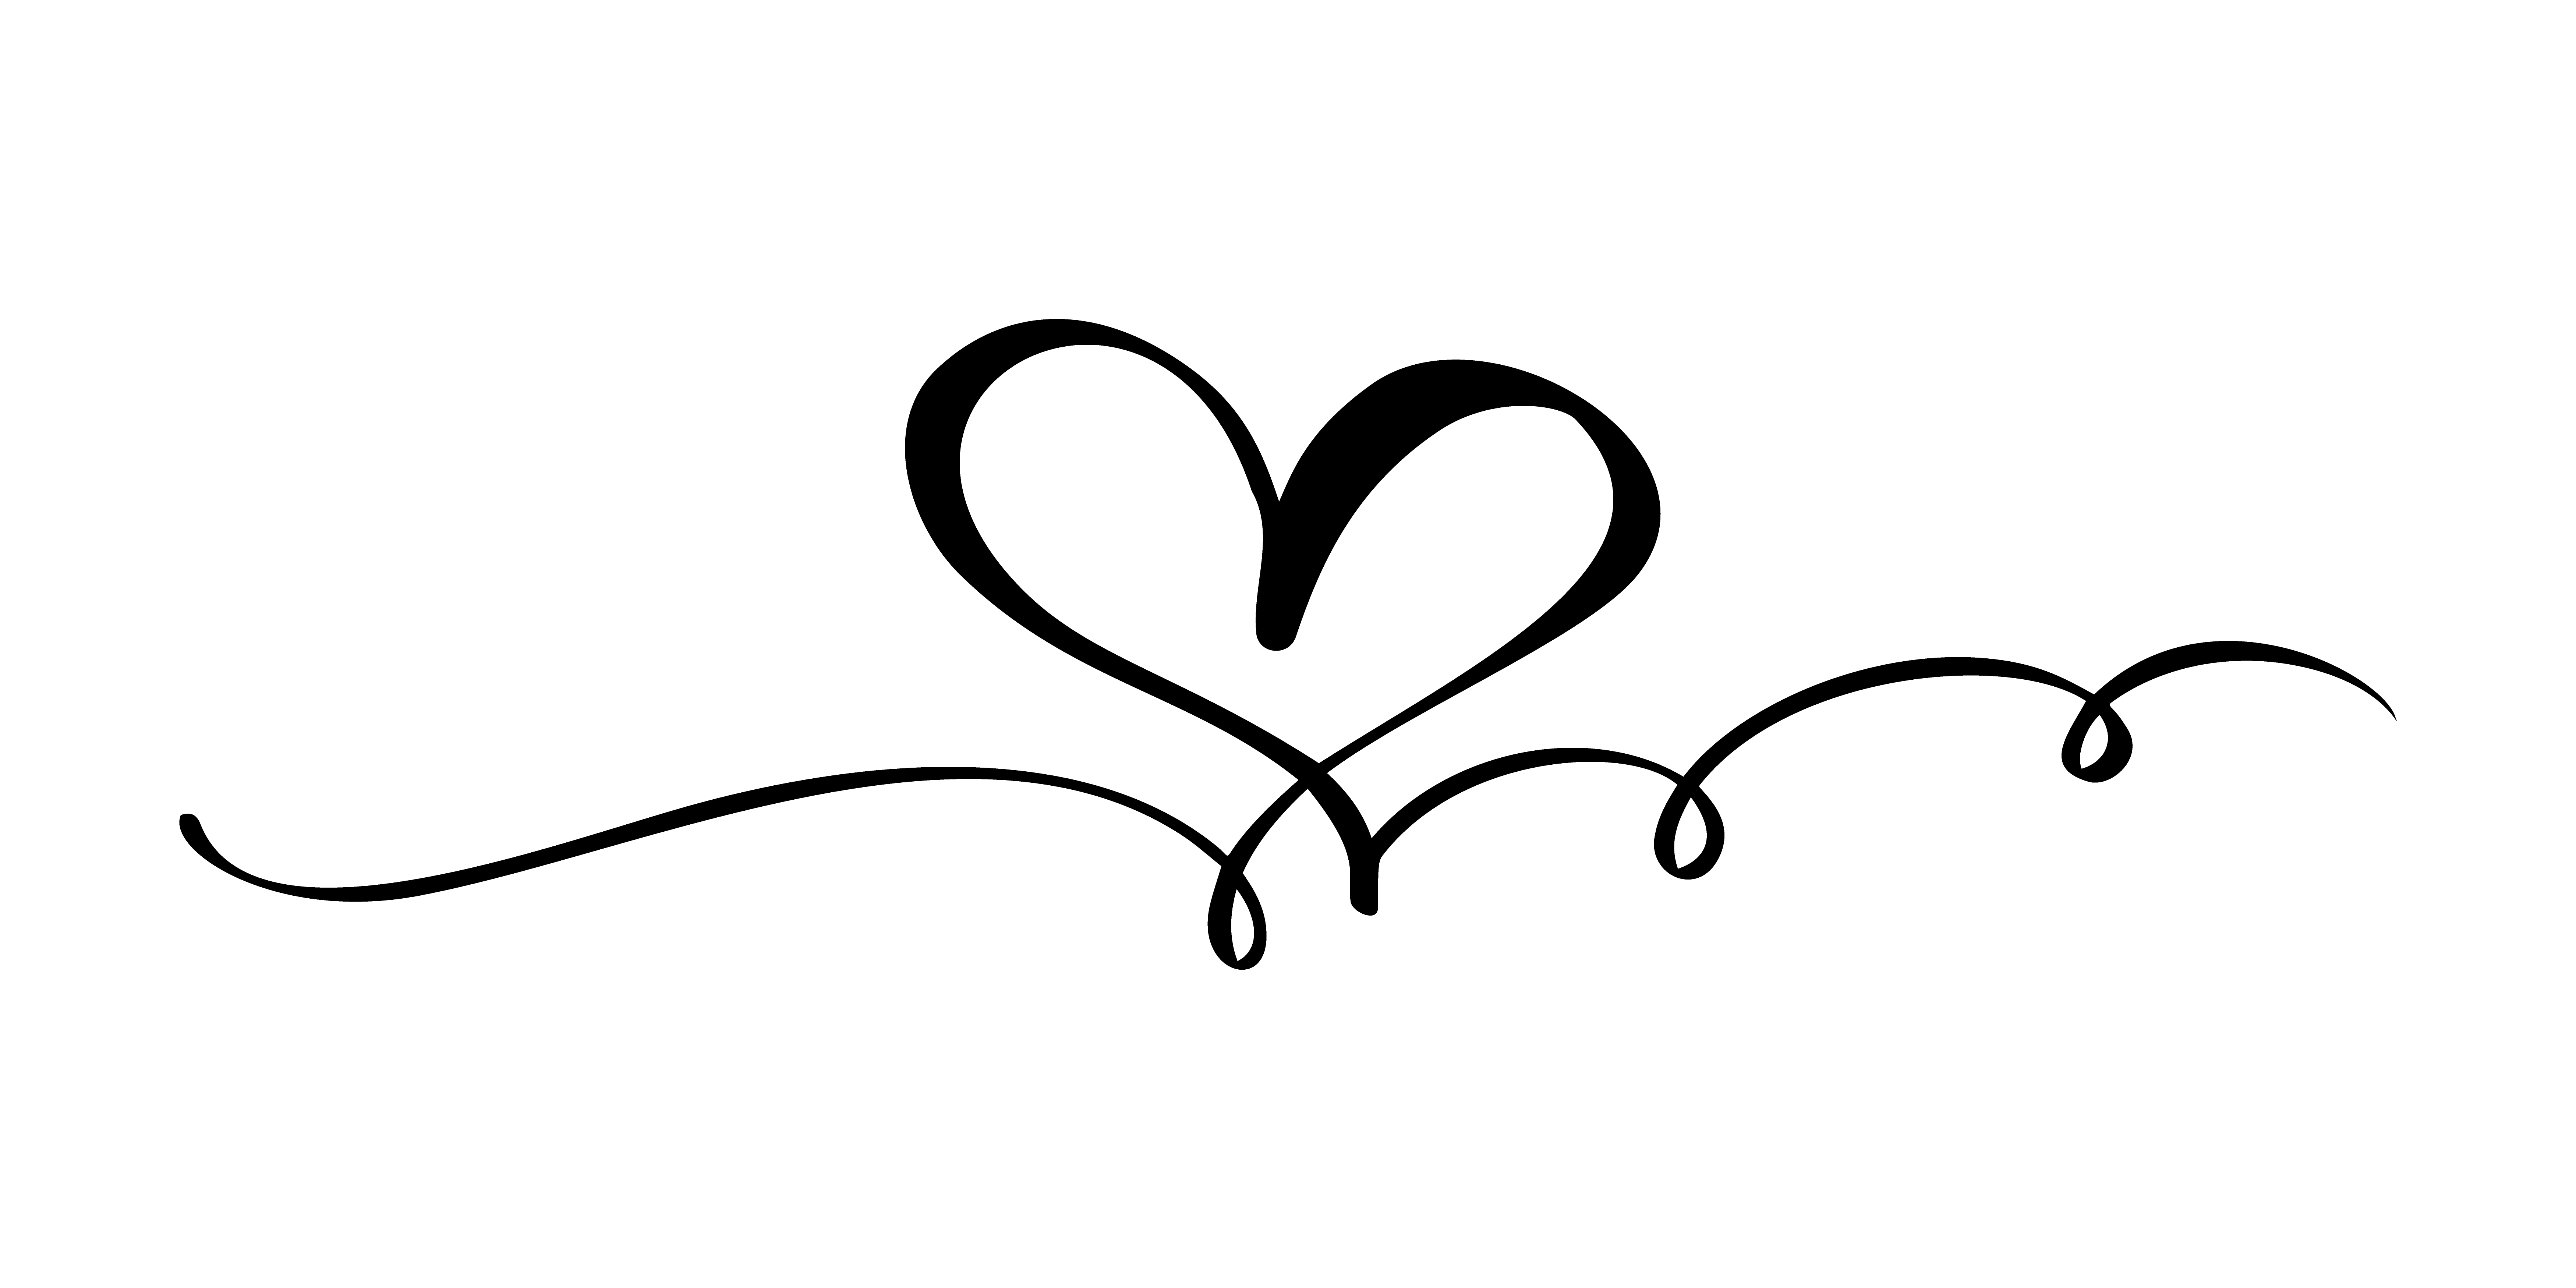 Hand drawn Heart love sign. Romantic calligraphy vector illustration